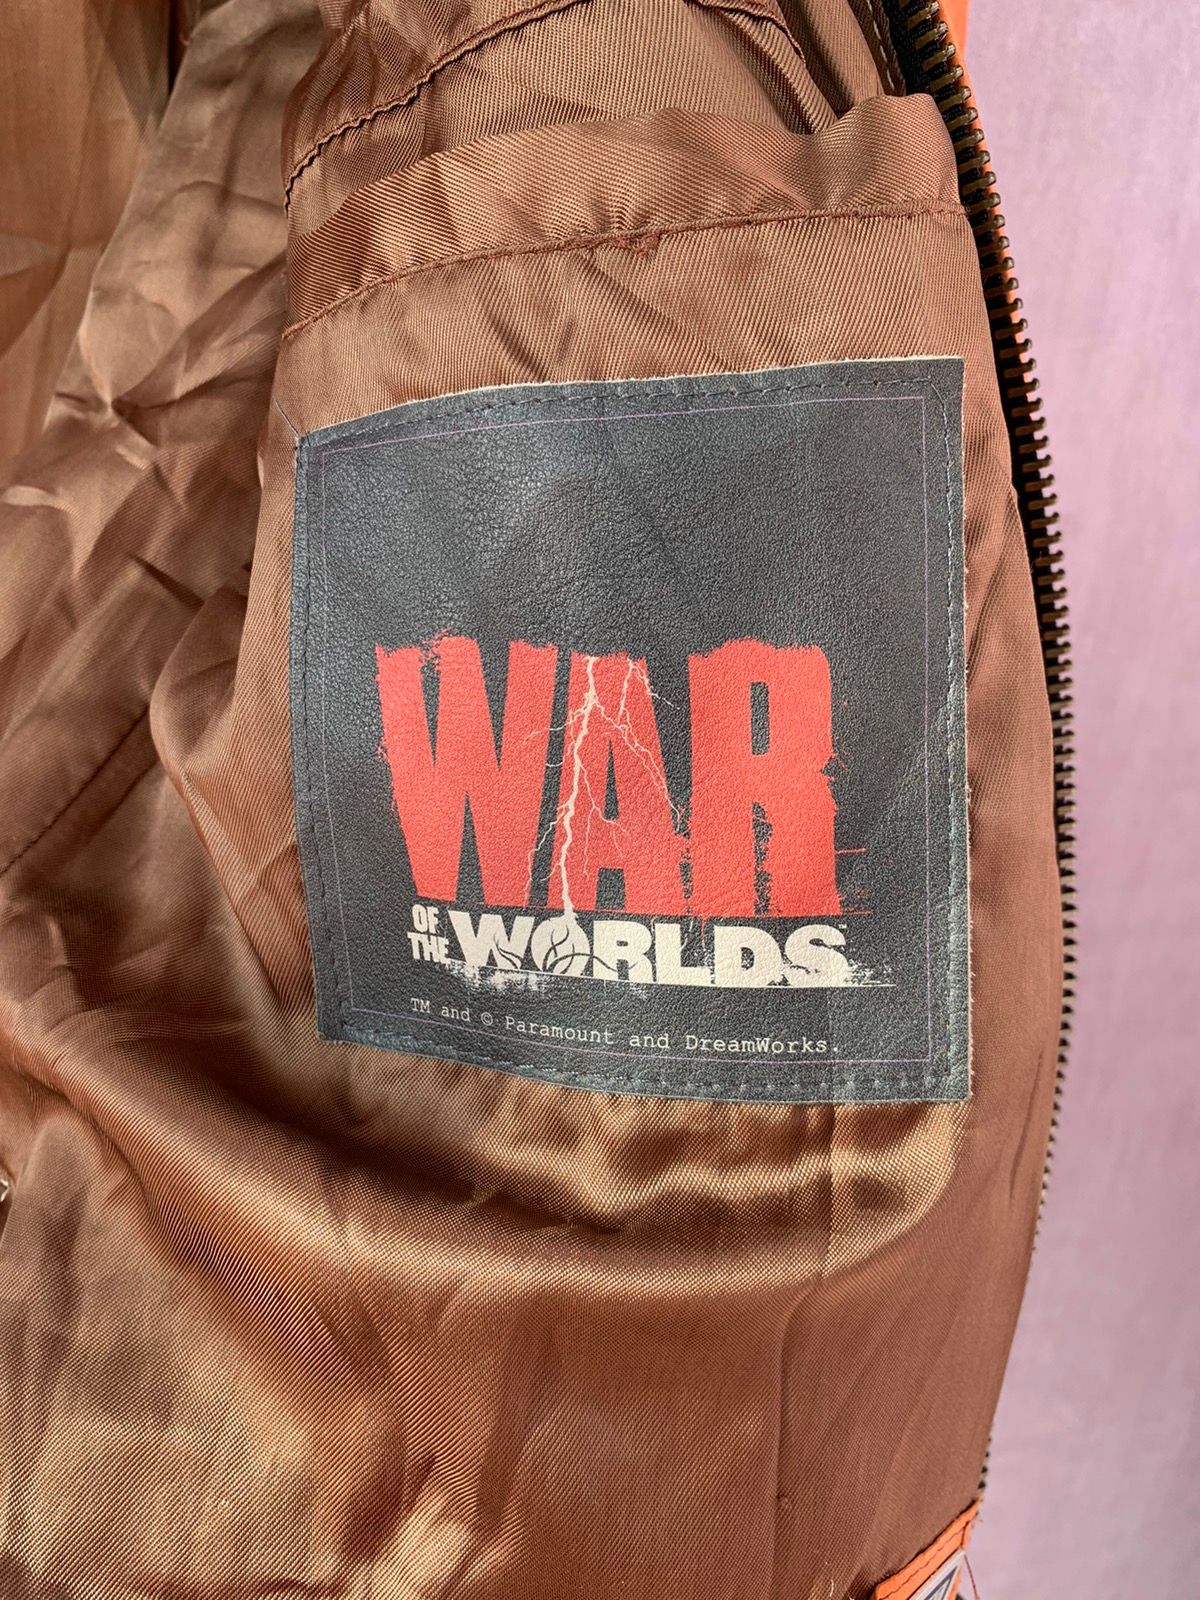 Belstaff Belstaff HERO Leather Jacket (Tom Cruise War Of The Worlds) Size US S / EU 44-46 / 1 - 11 Thumbnail